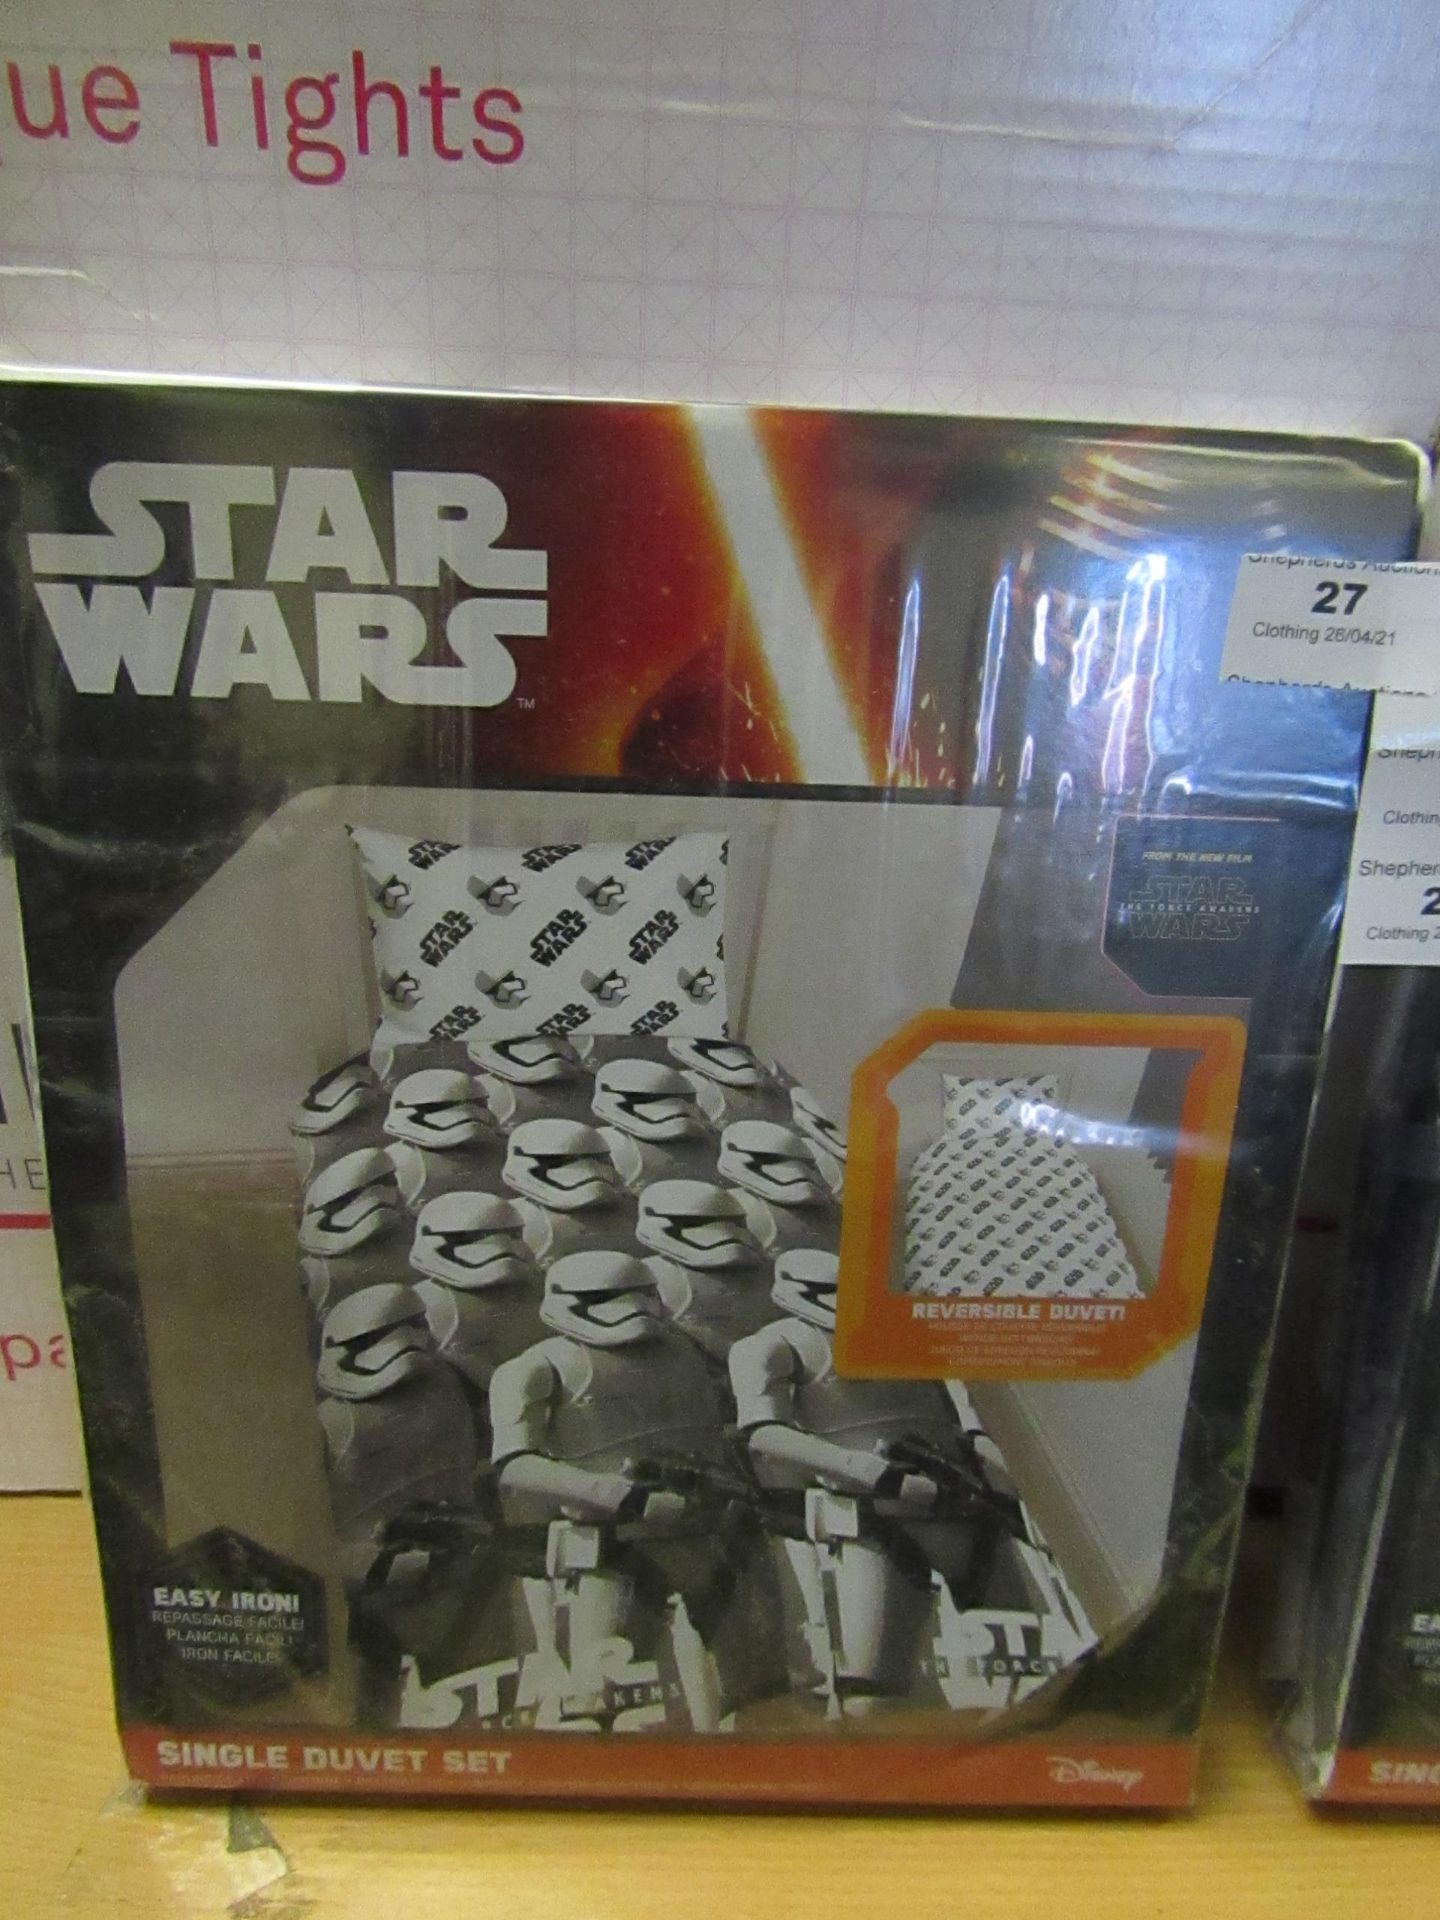 1 x Disney Star Wars Single Duvet Set new & packaged